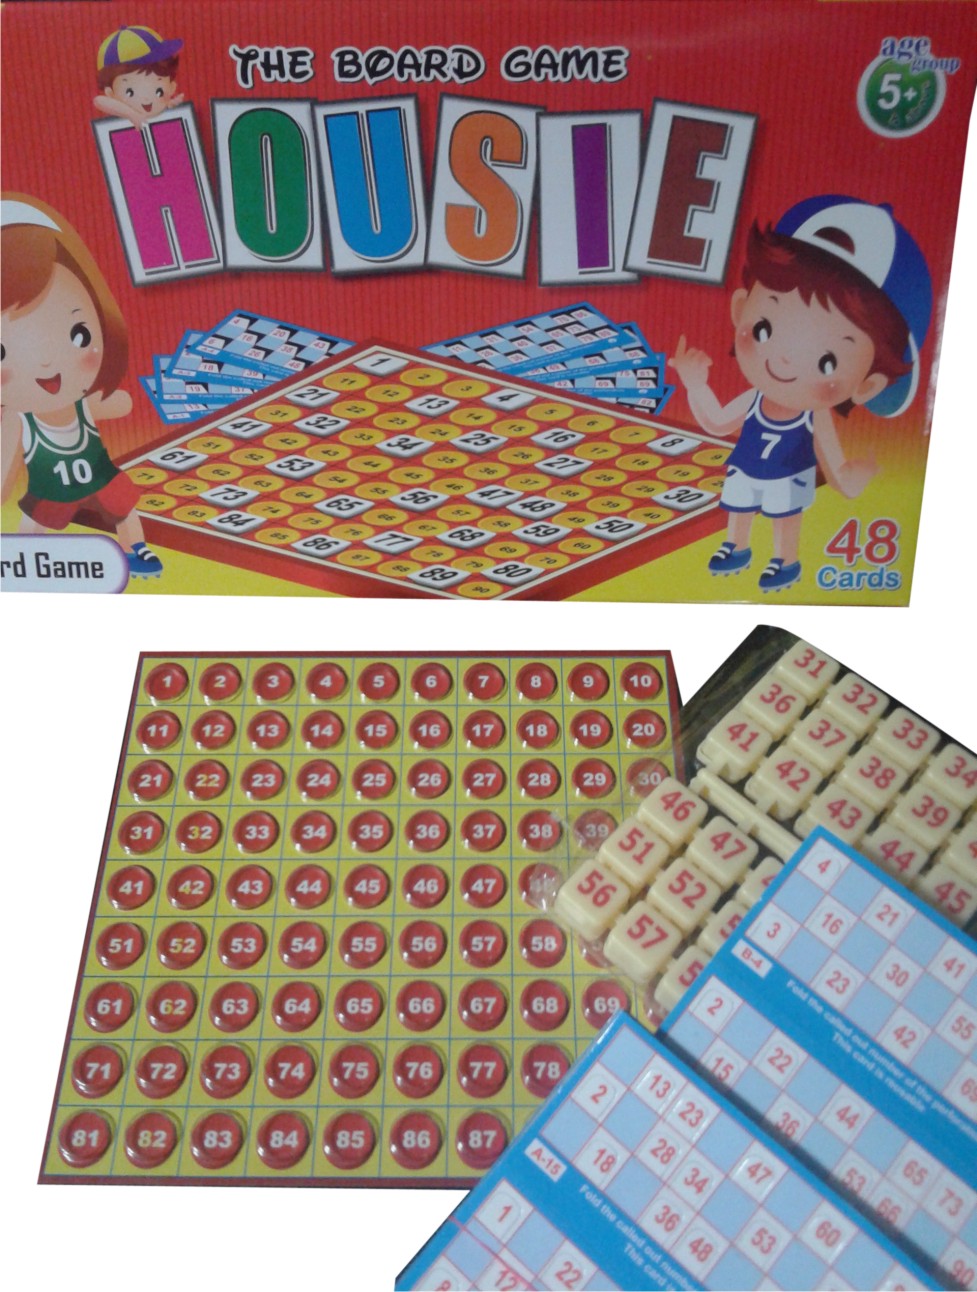 Housie Board Game